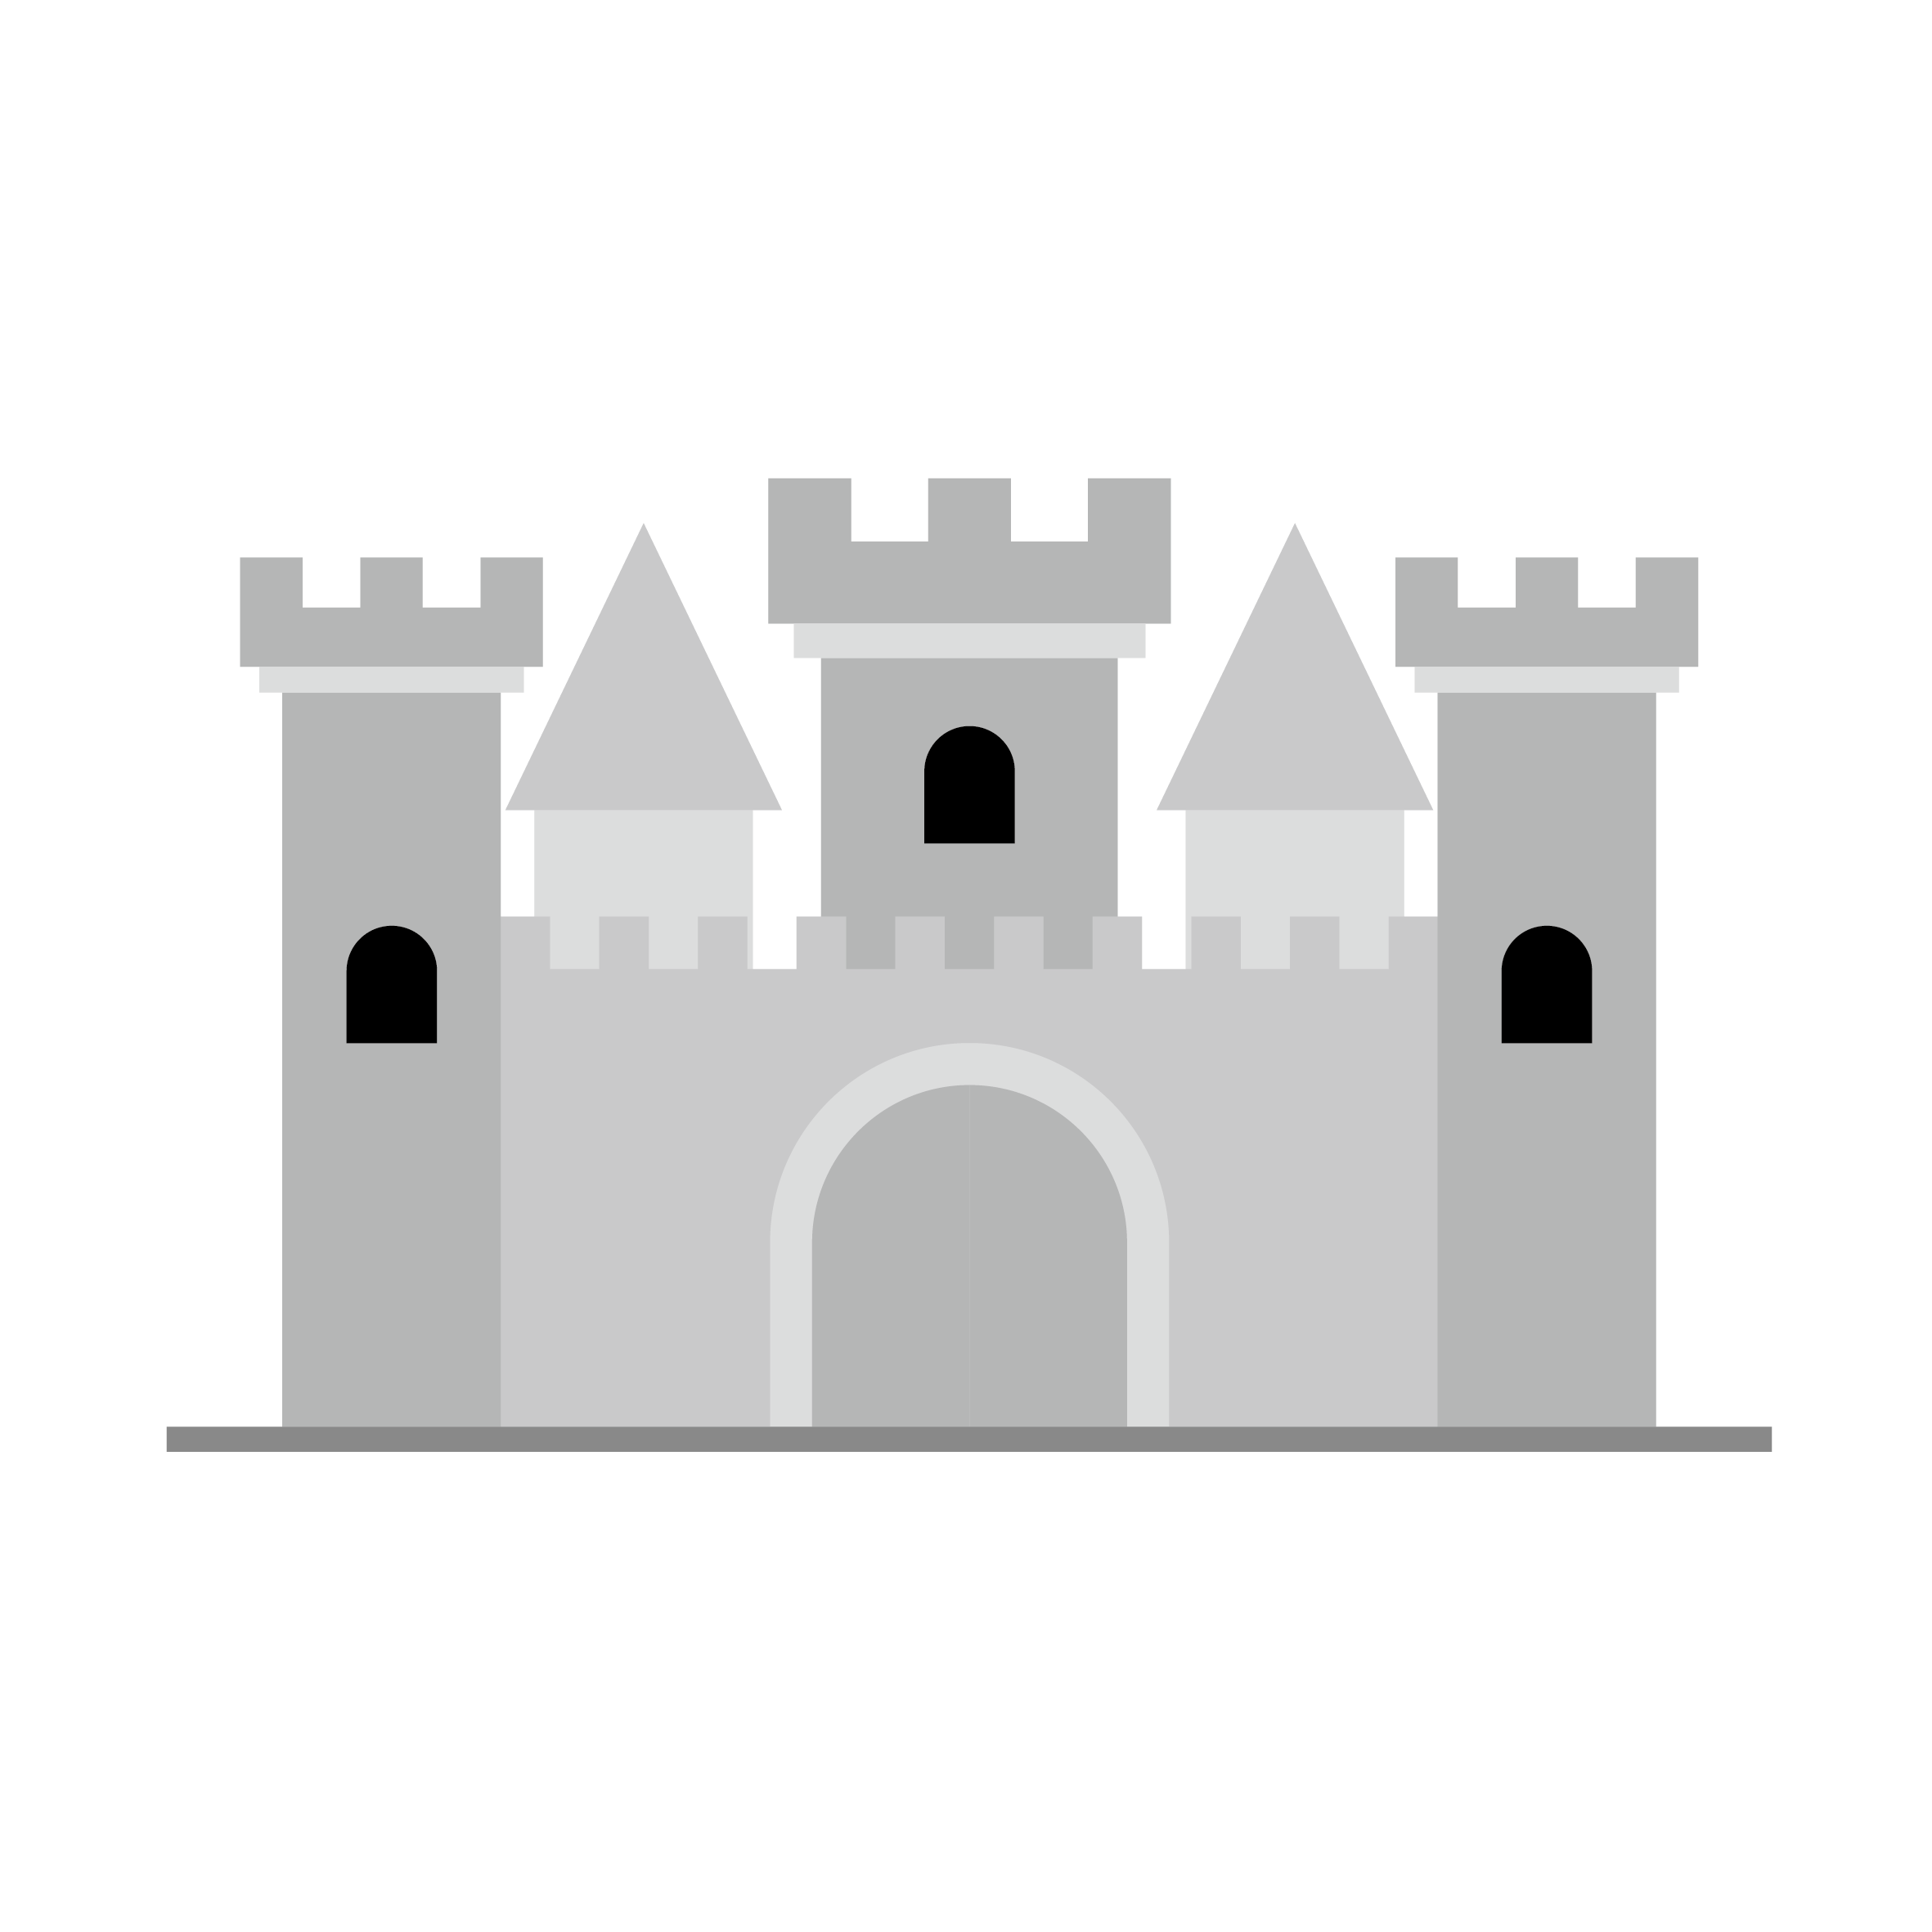 artist impression of a castle